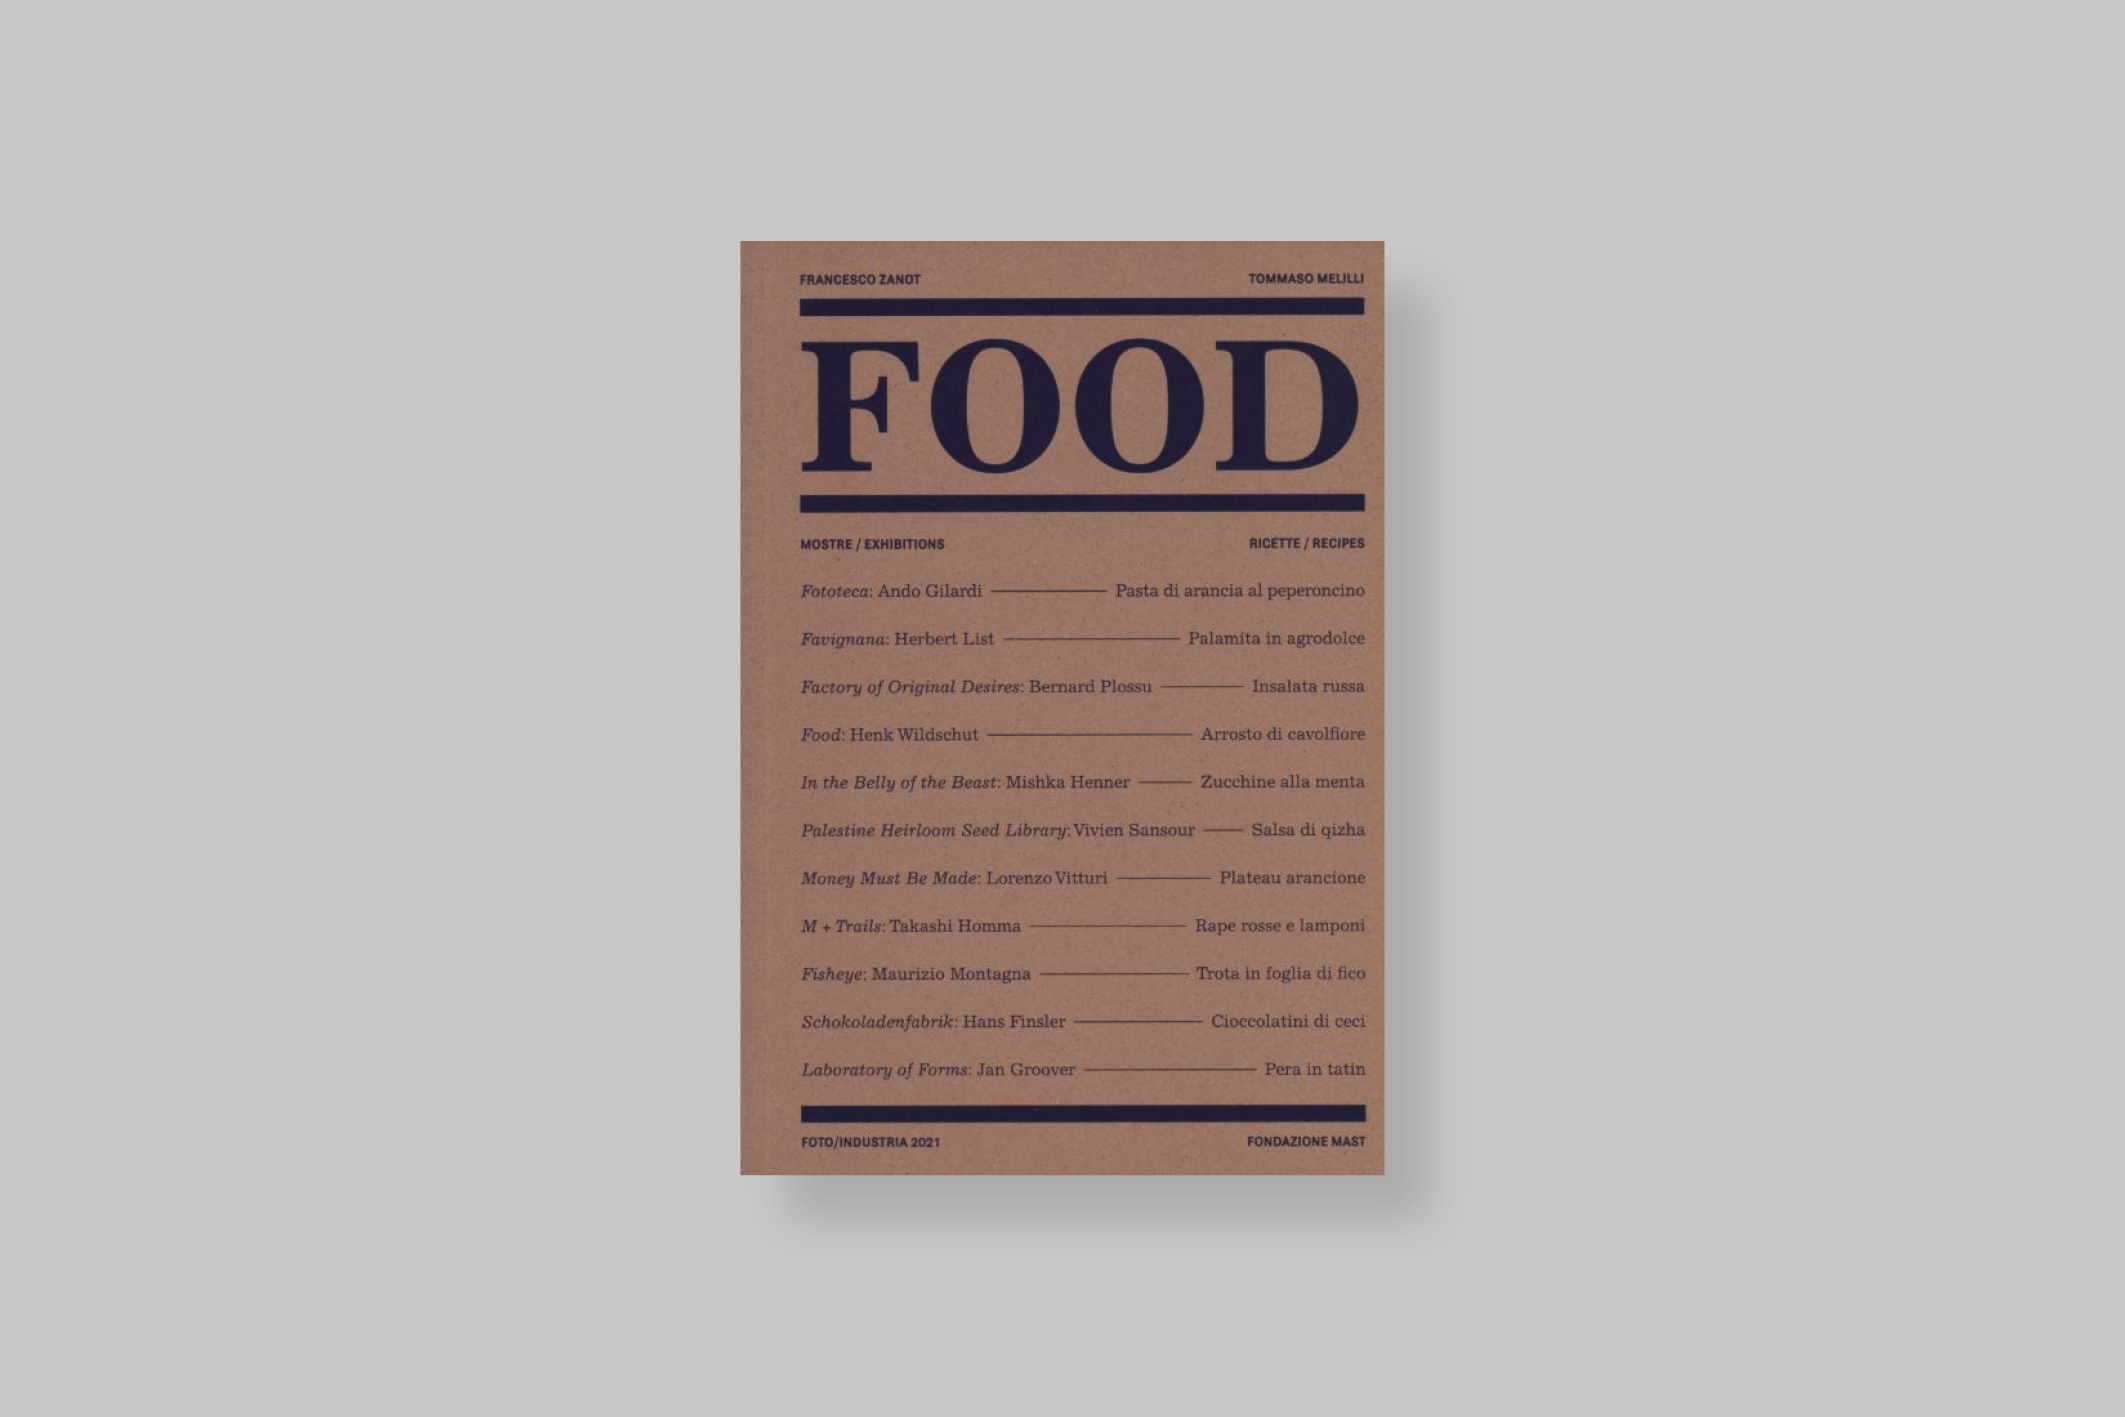 Food-Foto-industria-2021-cover